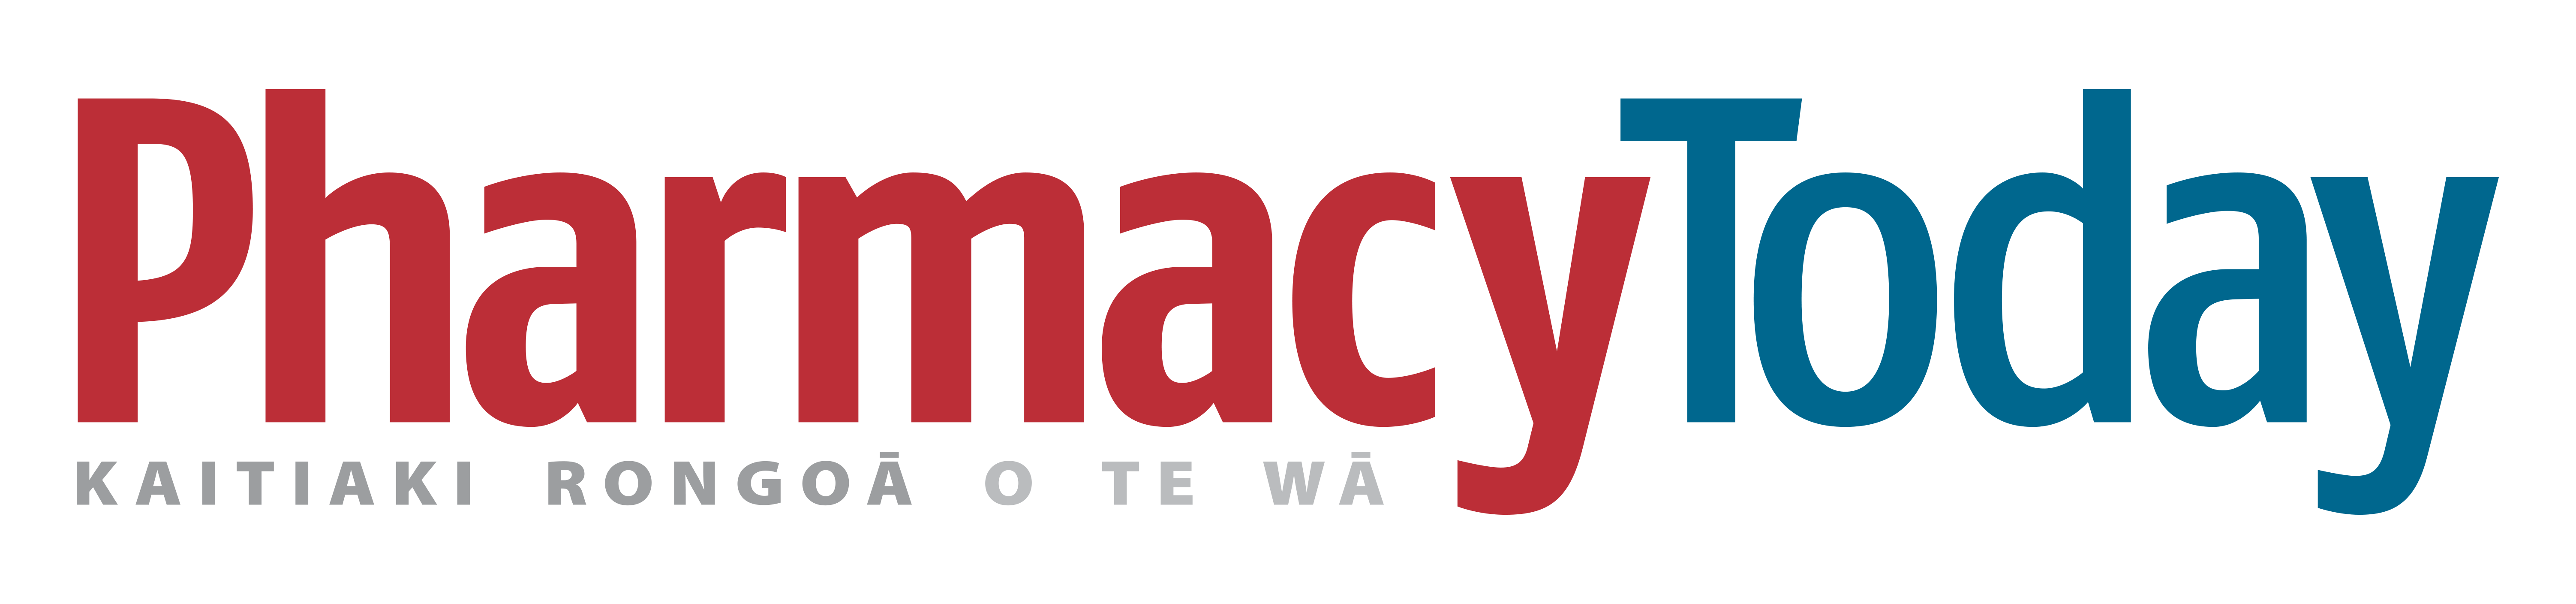 Pharmacy Today|Kaitiaki Rongoā o te Wā masthead